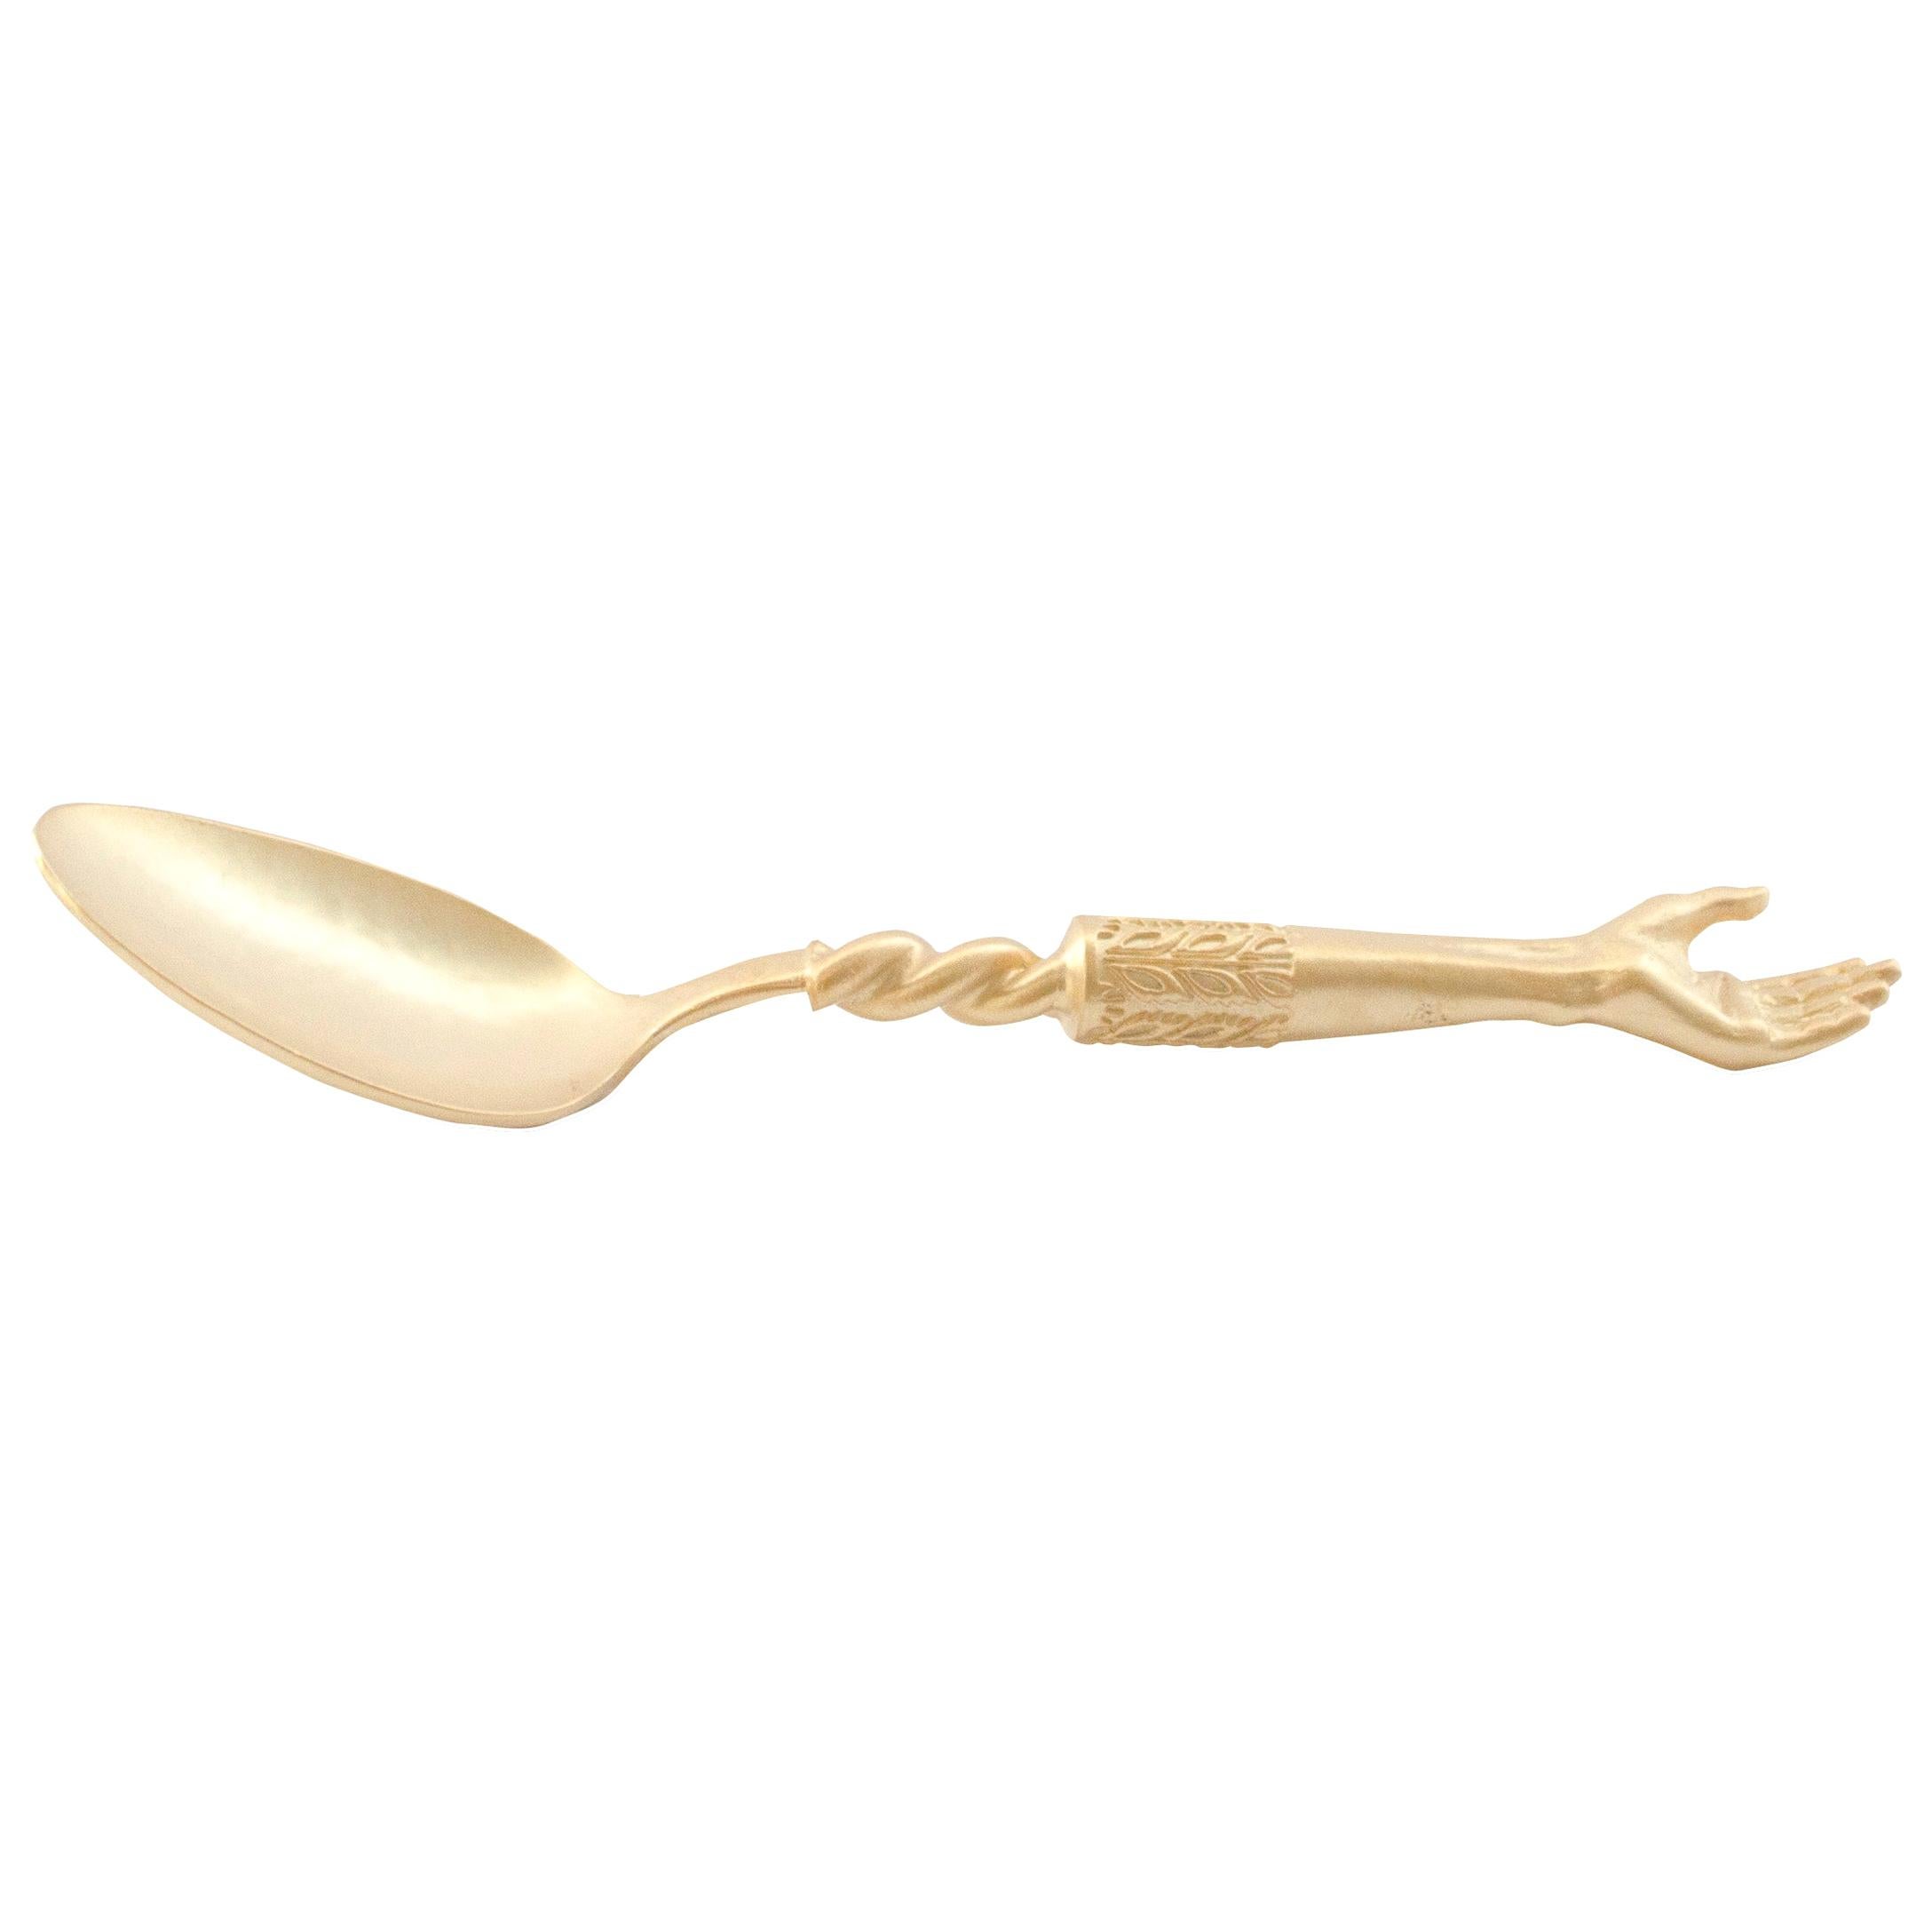 Golden Plated Hand Tea Spoon Handcrafted Natalia Criado For Sale